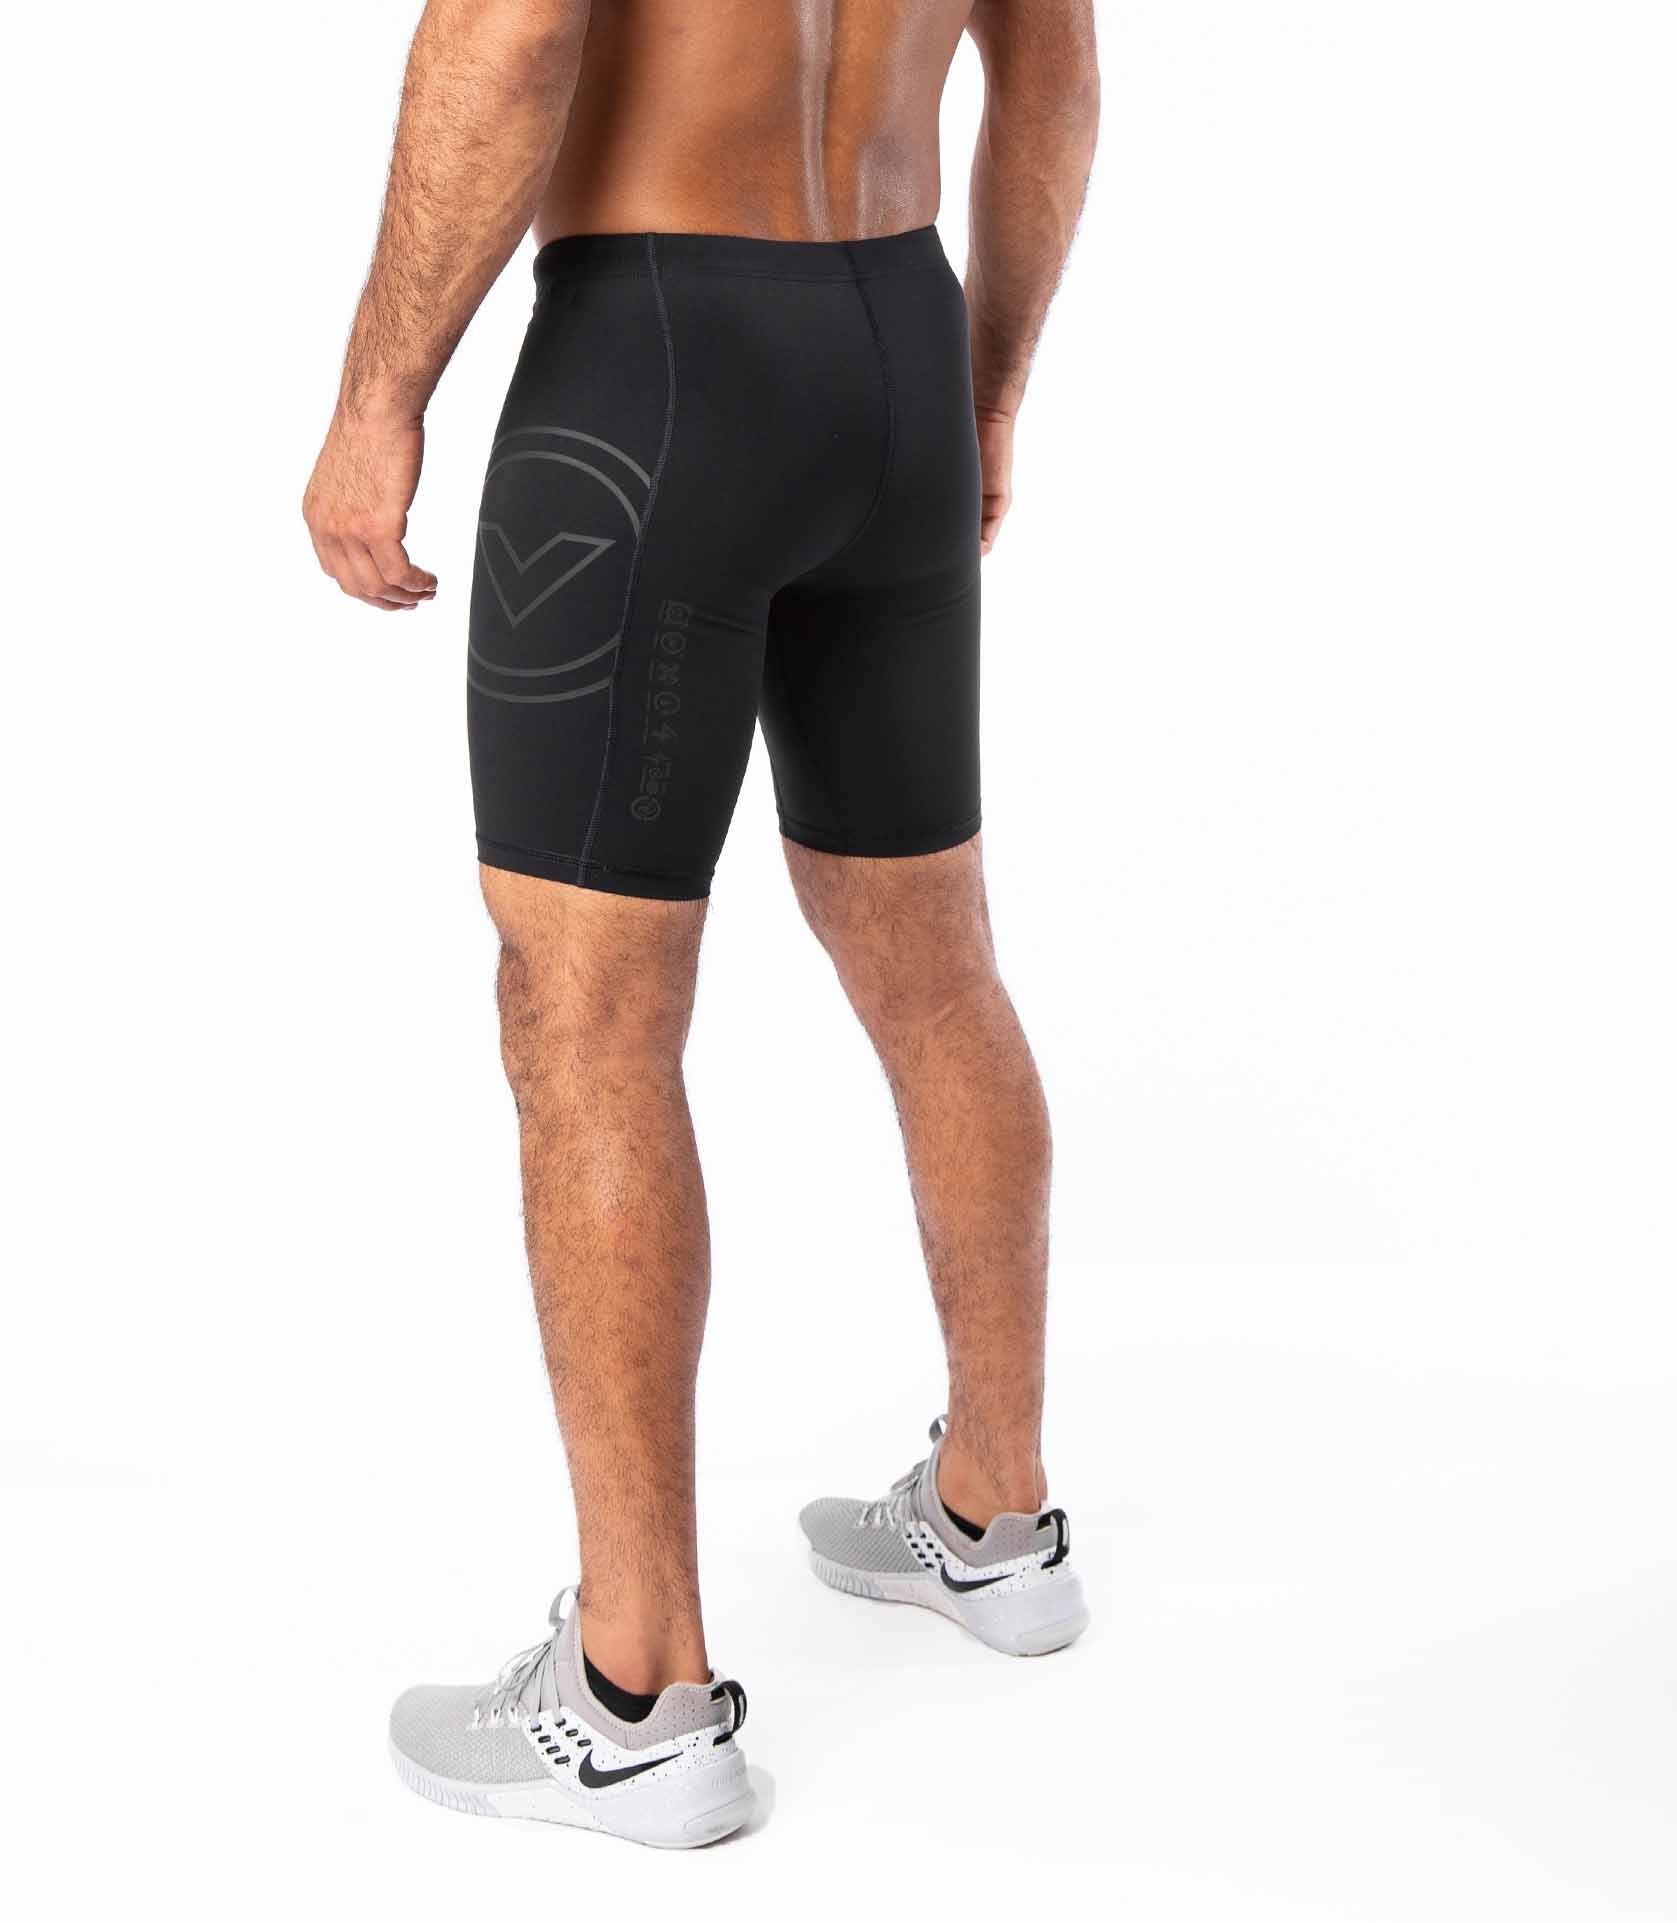 AU11 Tech Shorts